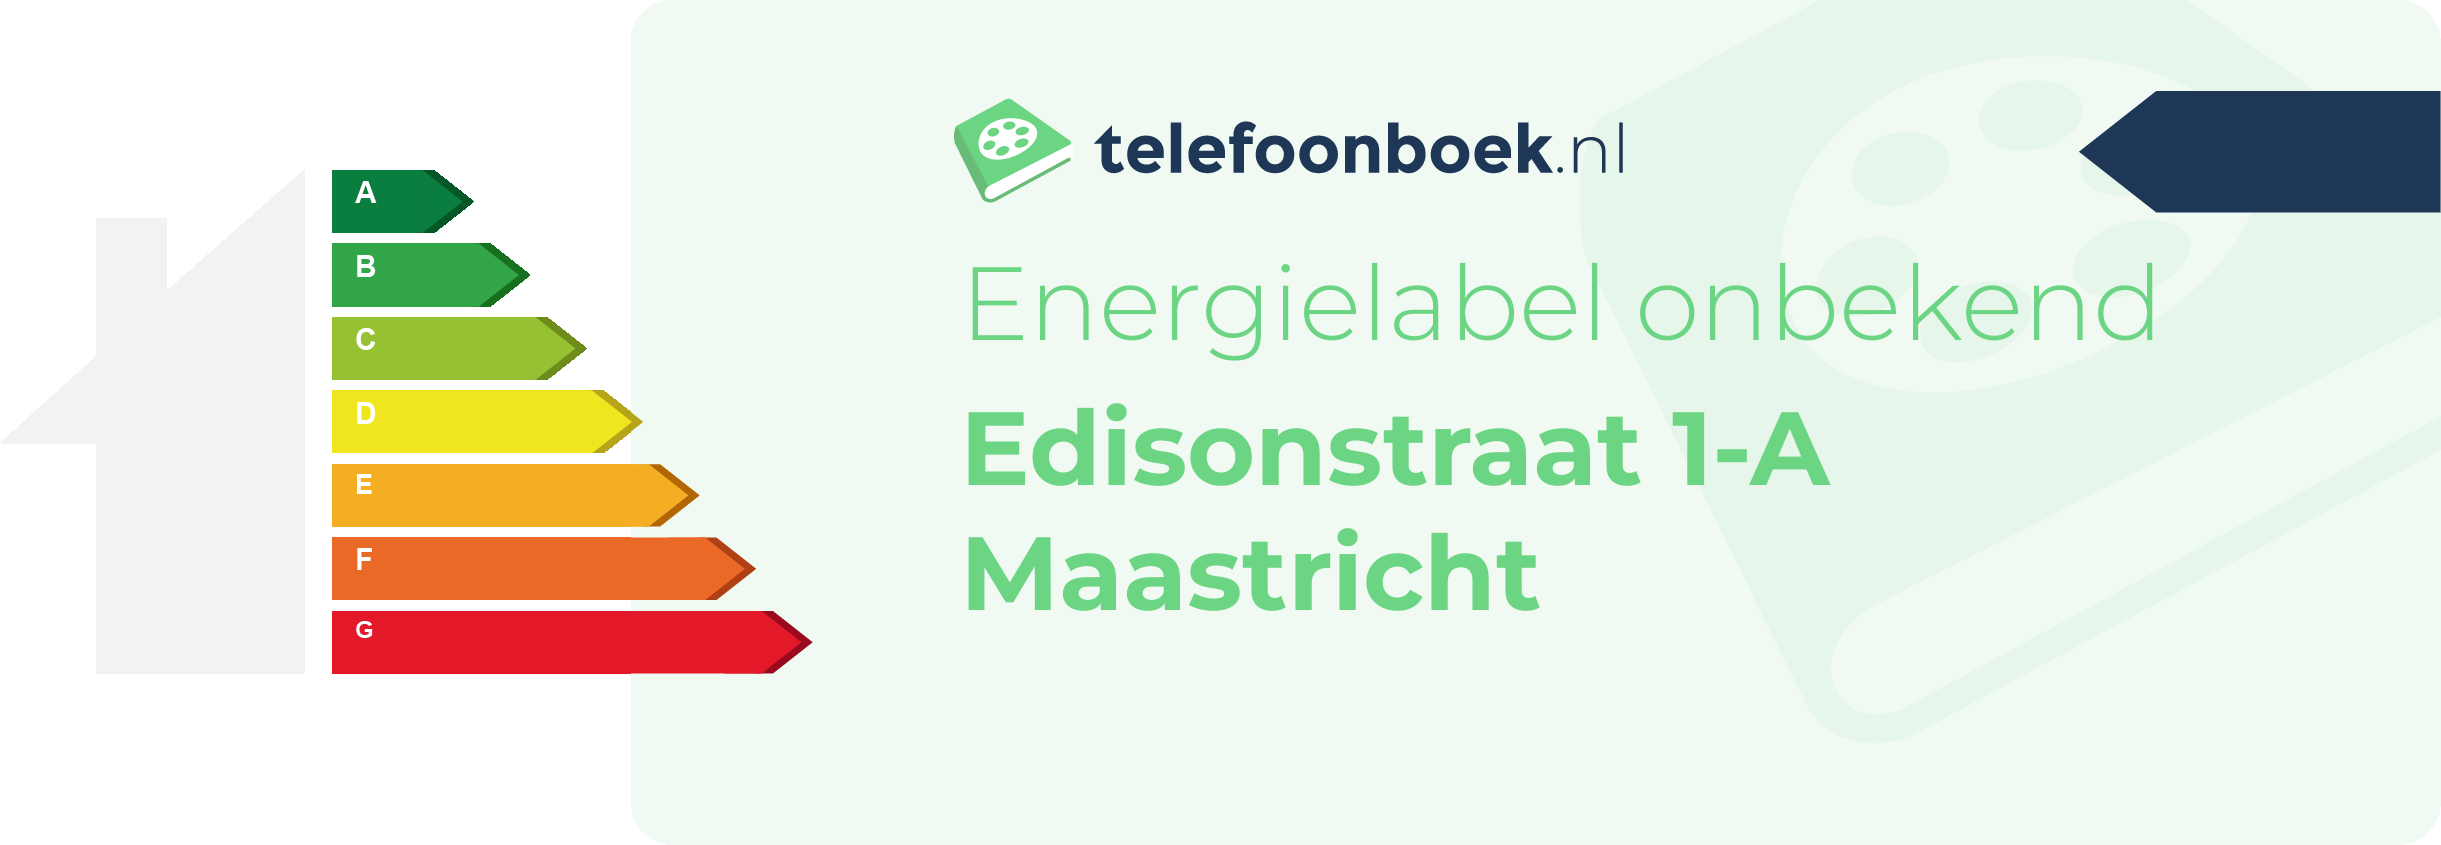 Energielabel Edisonstraat 1-A Maastricht